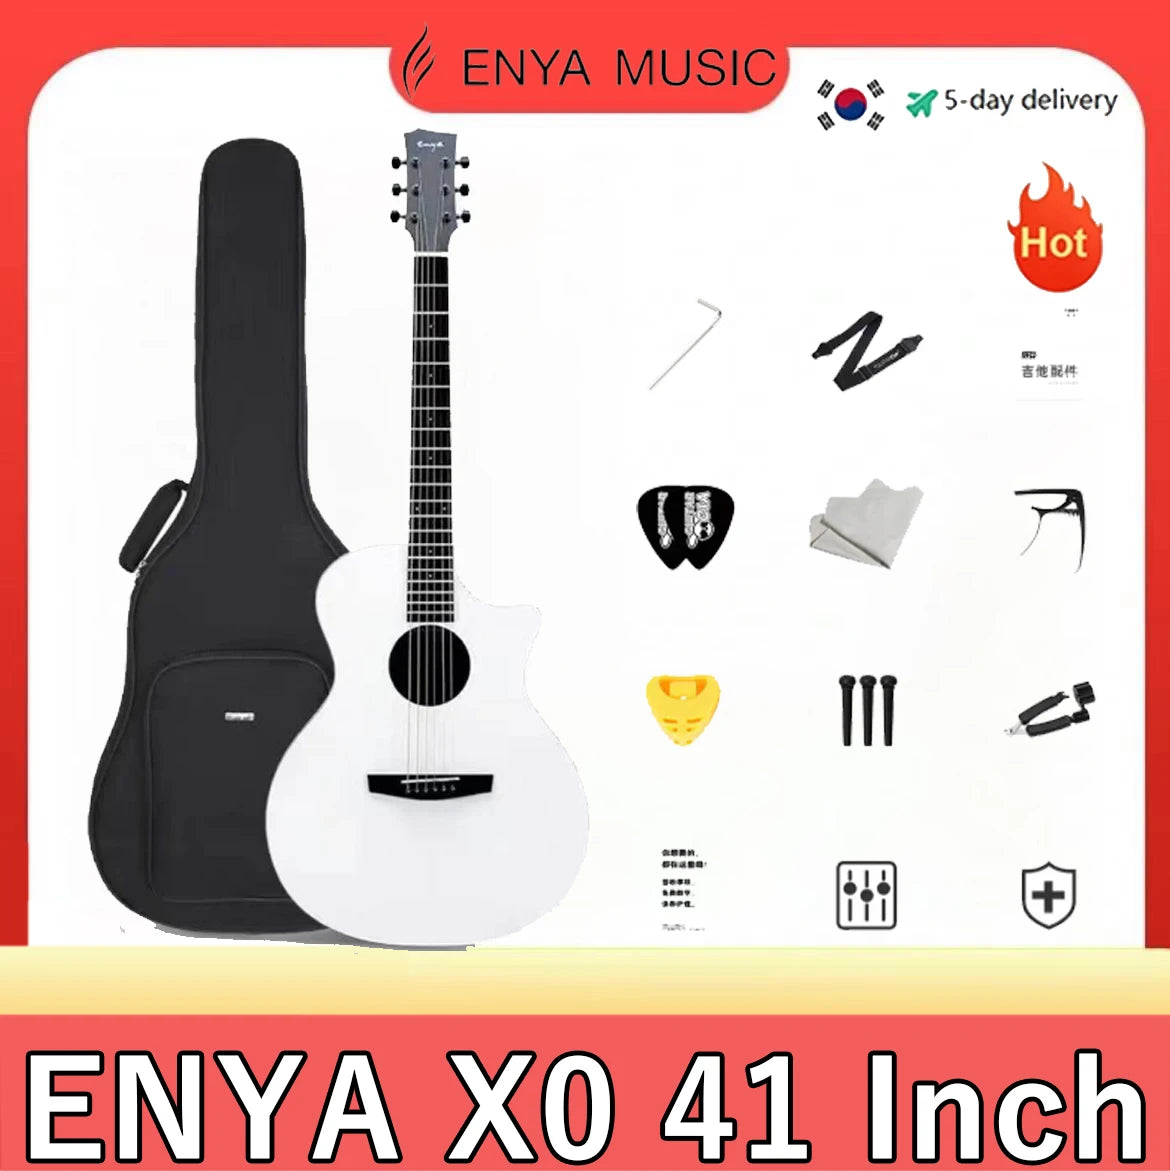 Enya X0 Guitar High-Colour Glacier White 41 Inch Folk Guitar - Premium acoustic guitar from Lizard Vigilante - Just $479.99! Shop now at Lizard Vigilante